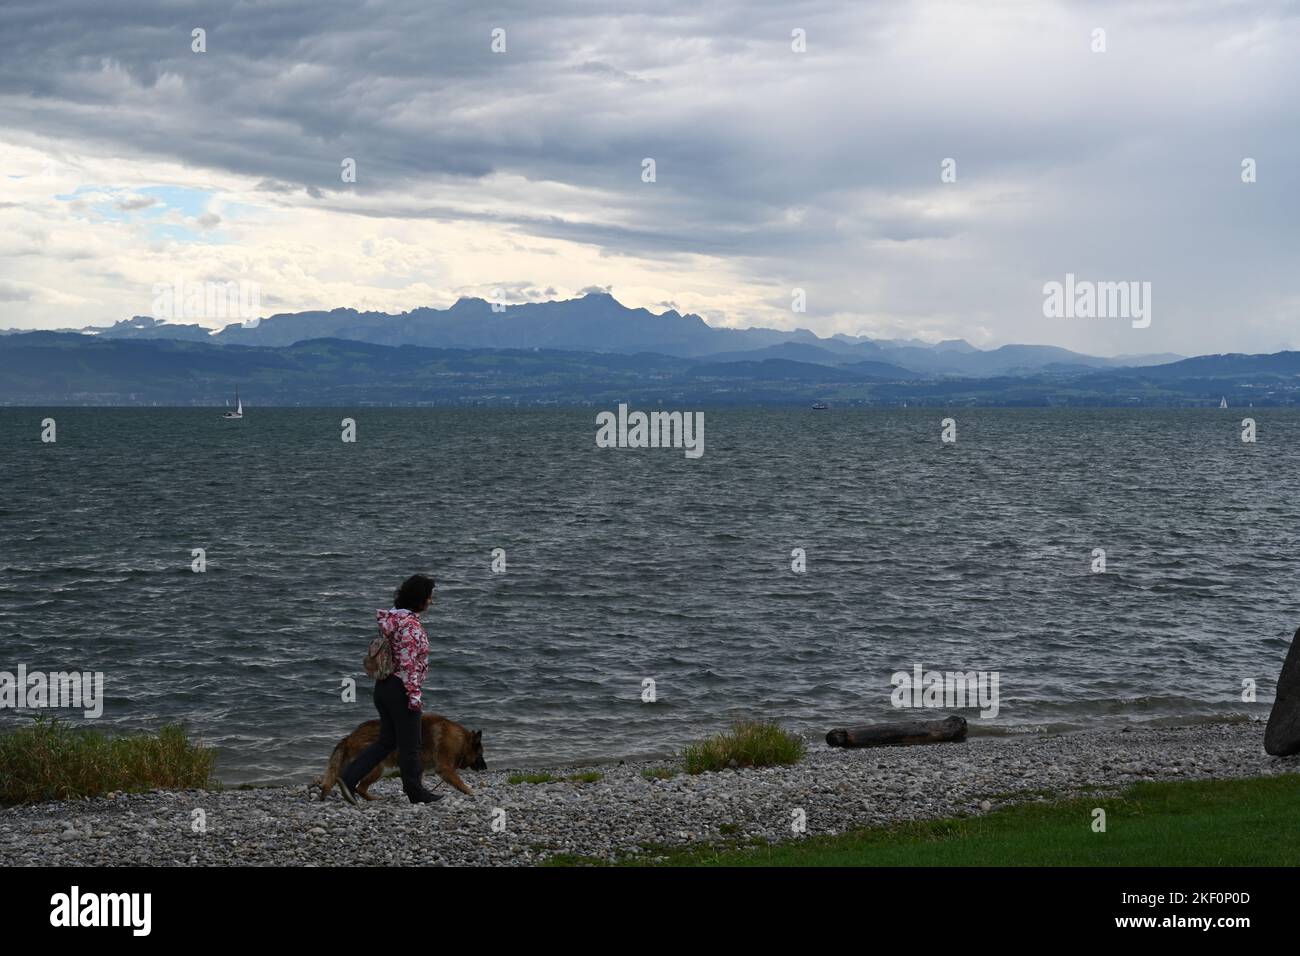 A woman is walking German Shepherd or Alsatian dog. Stock Photo